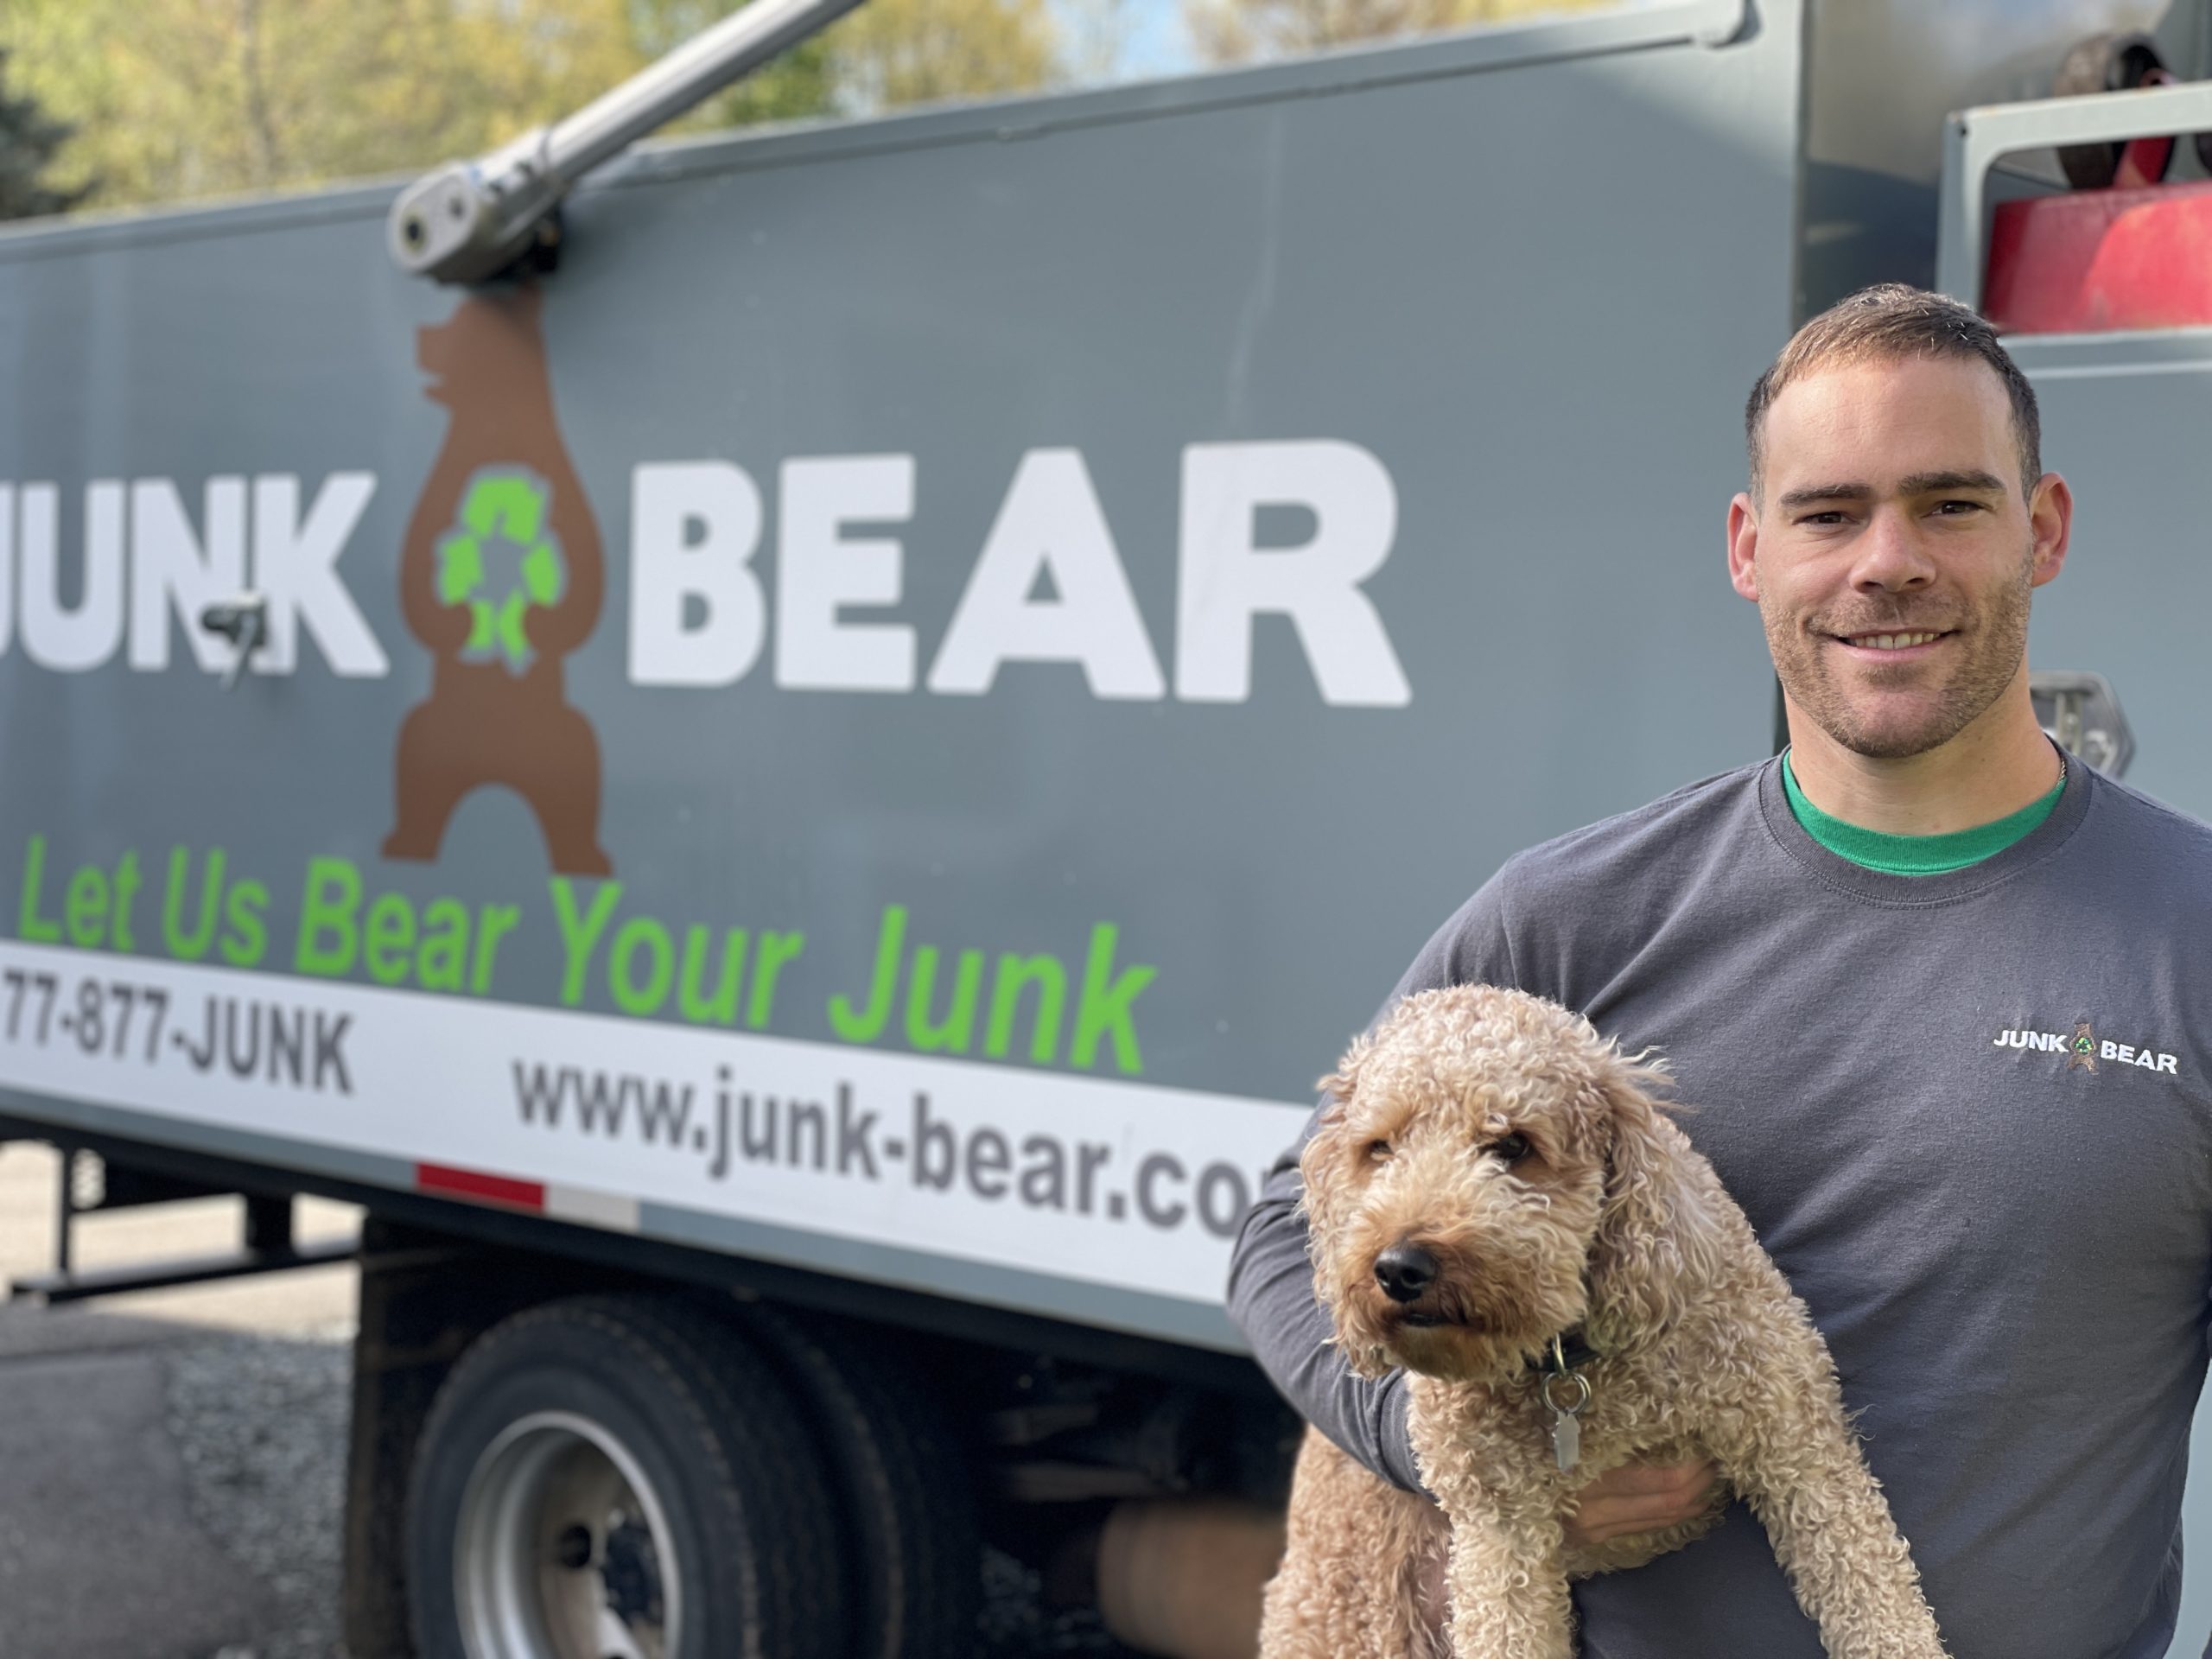 Junk Bear team member with dog